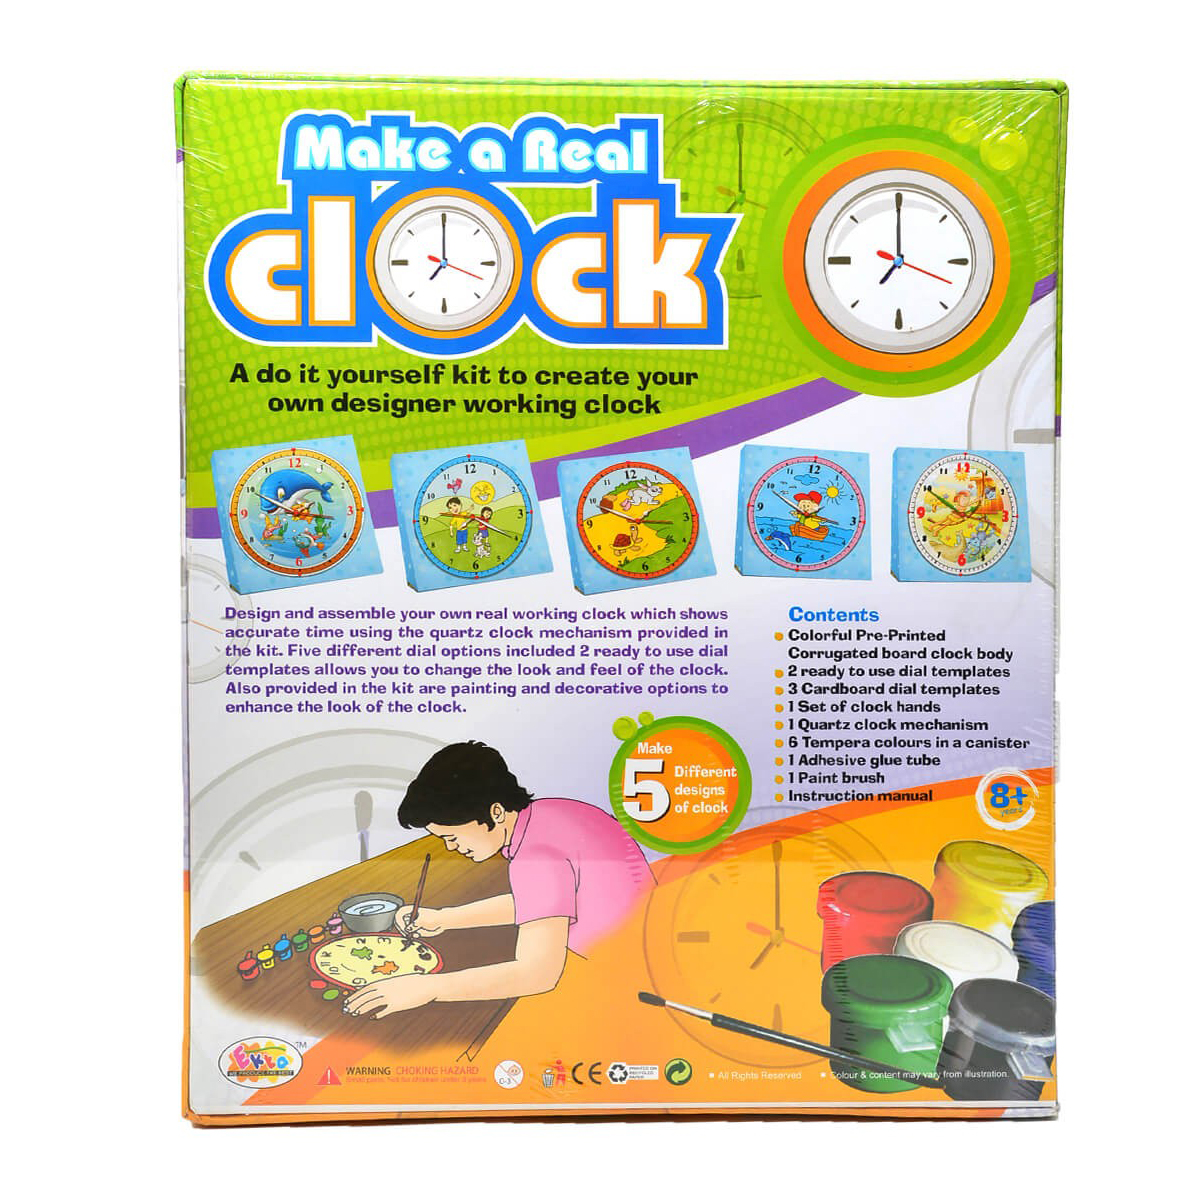 Ekta Paint & Make a Real Clock for Kids